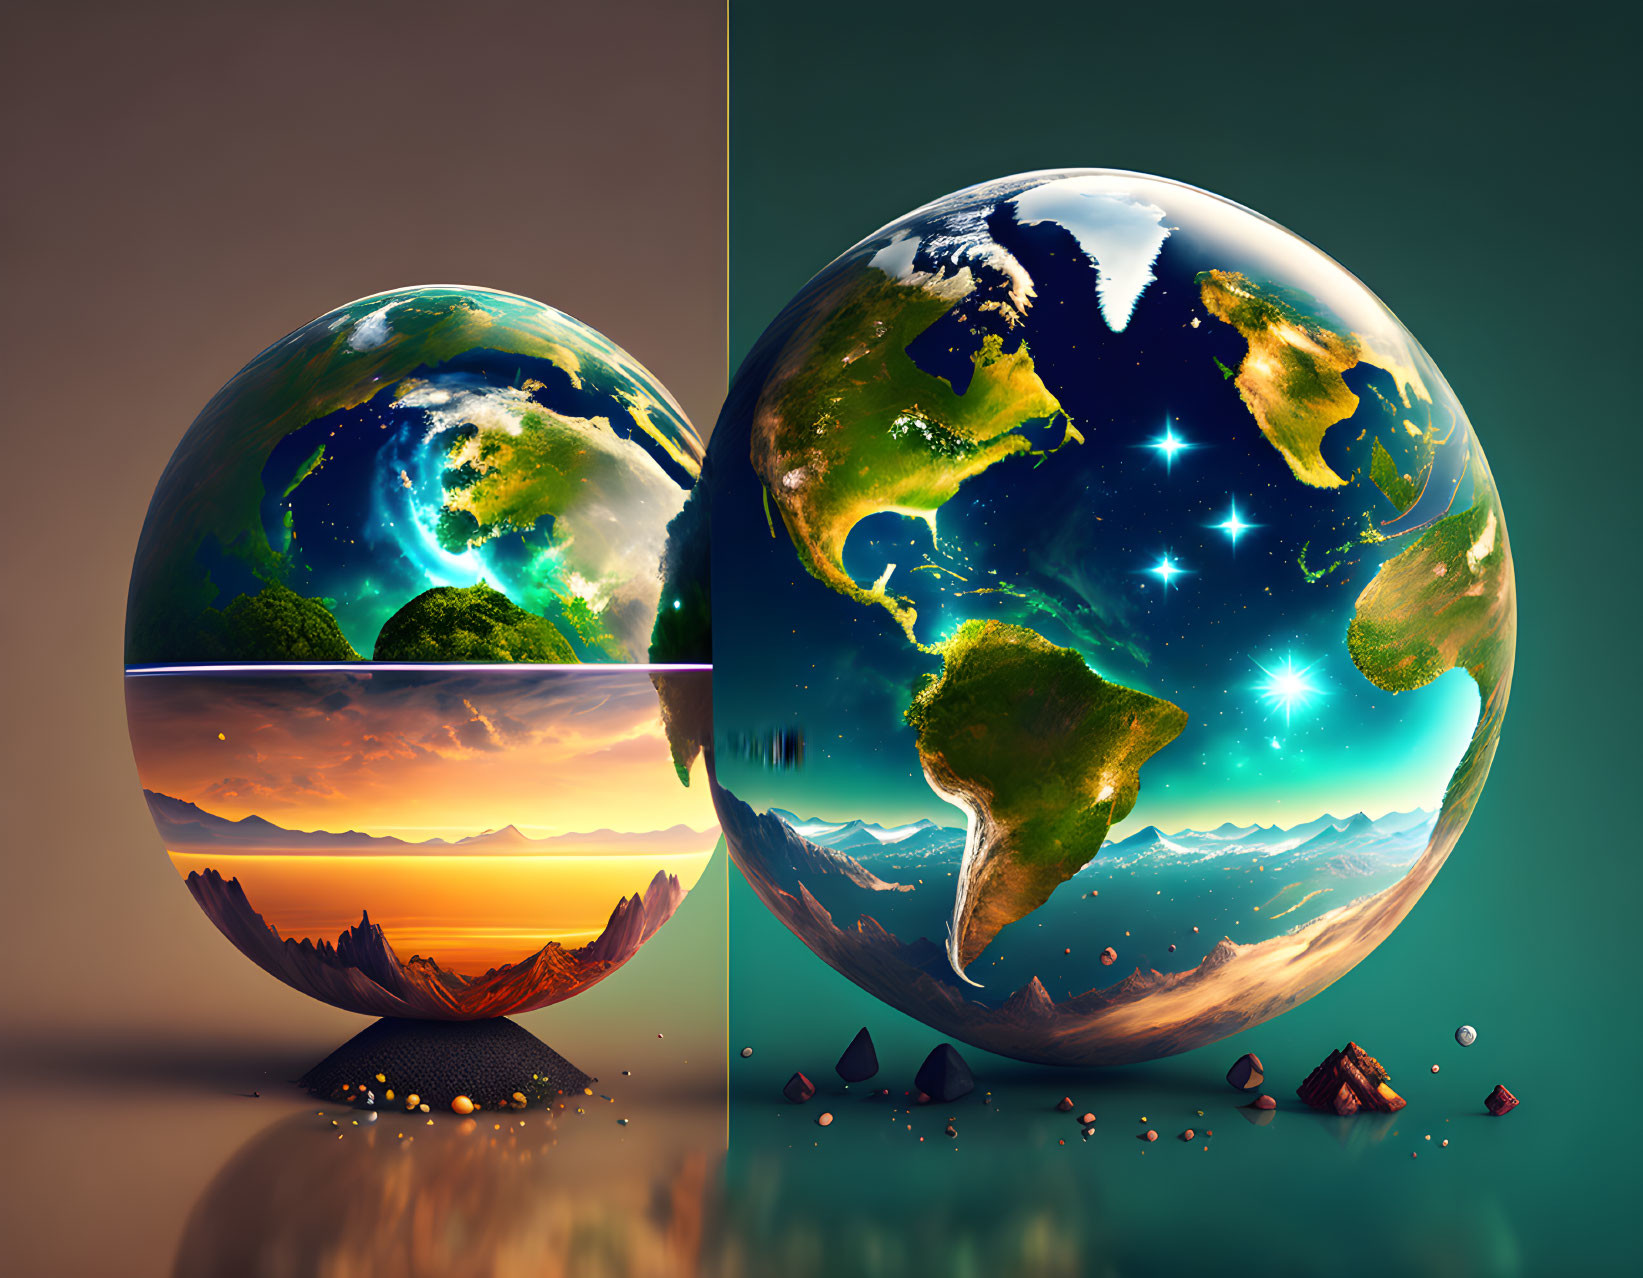 Surreal Earth artworks: peeled layer reveals sunset landscape, sparkling intact globe